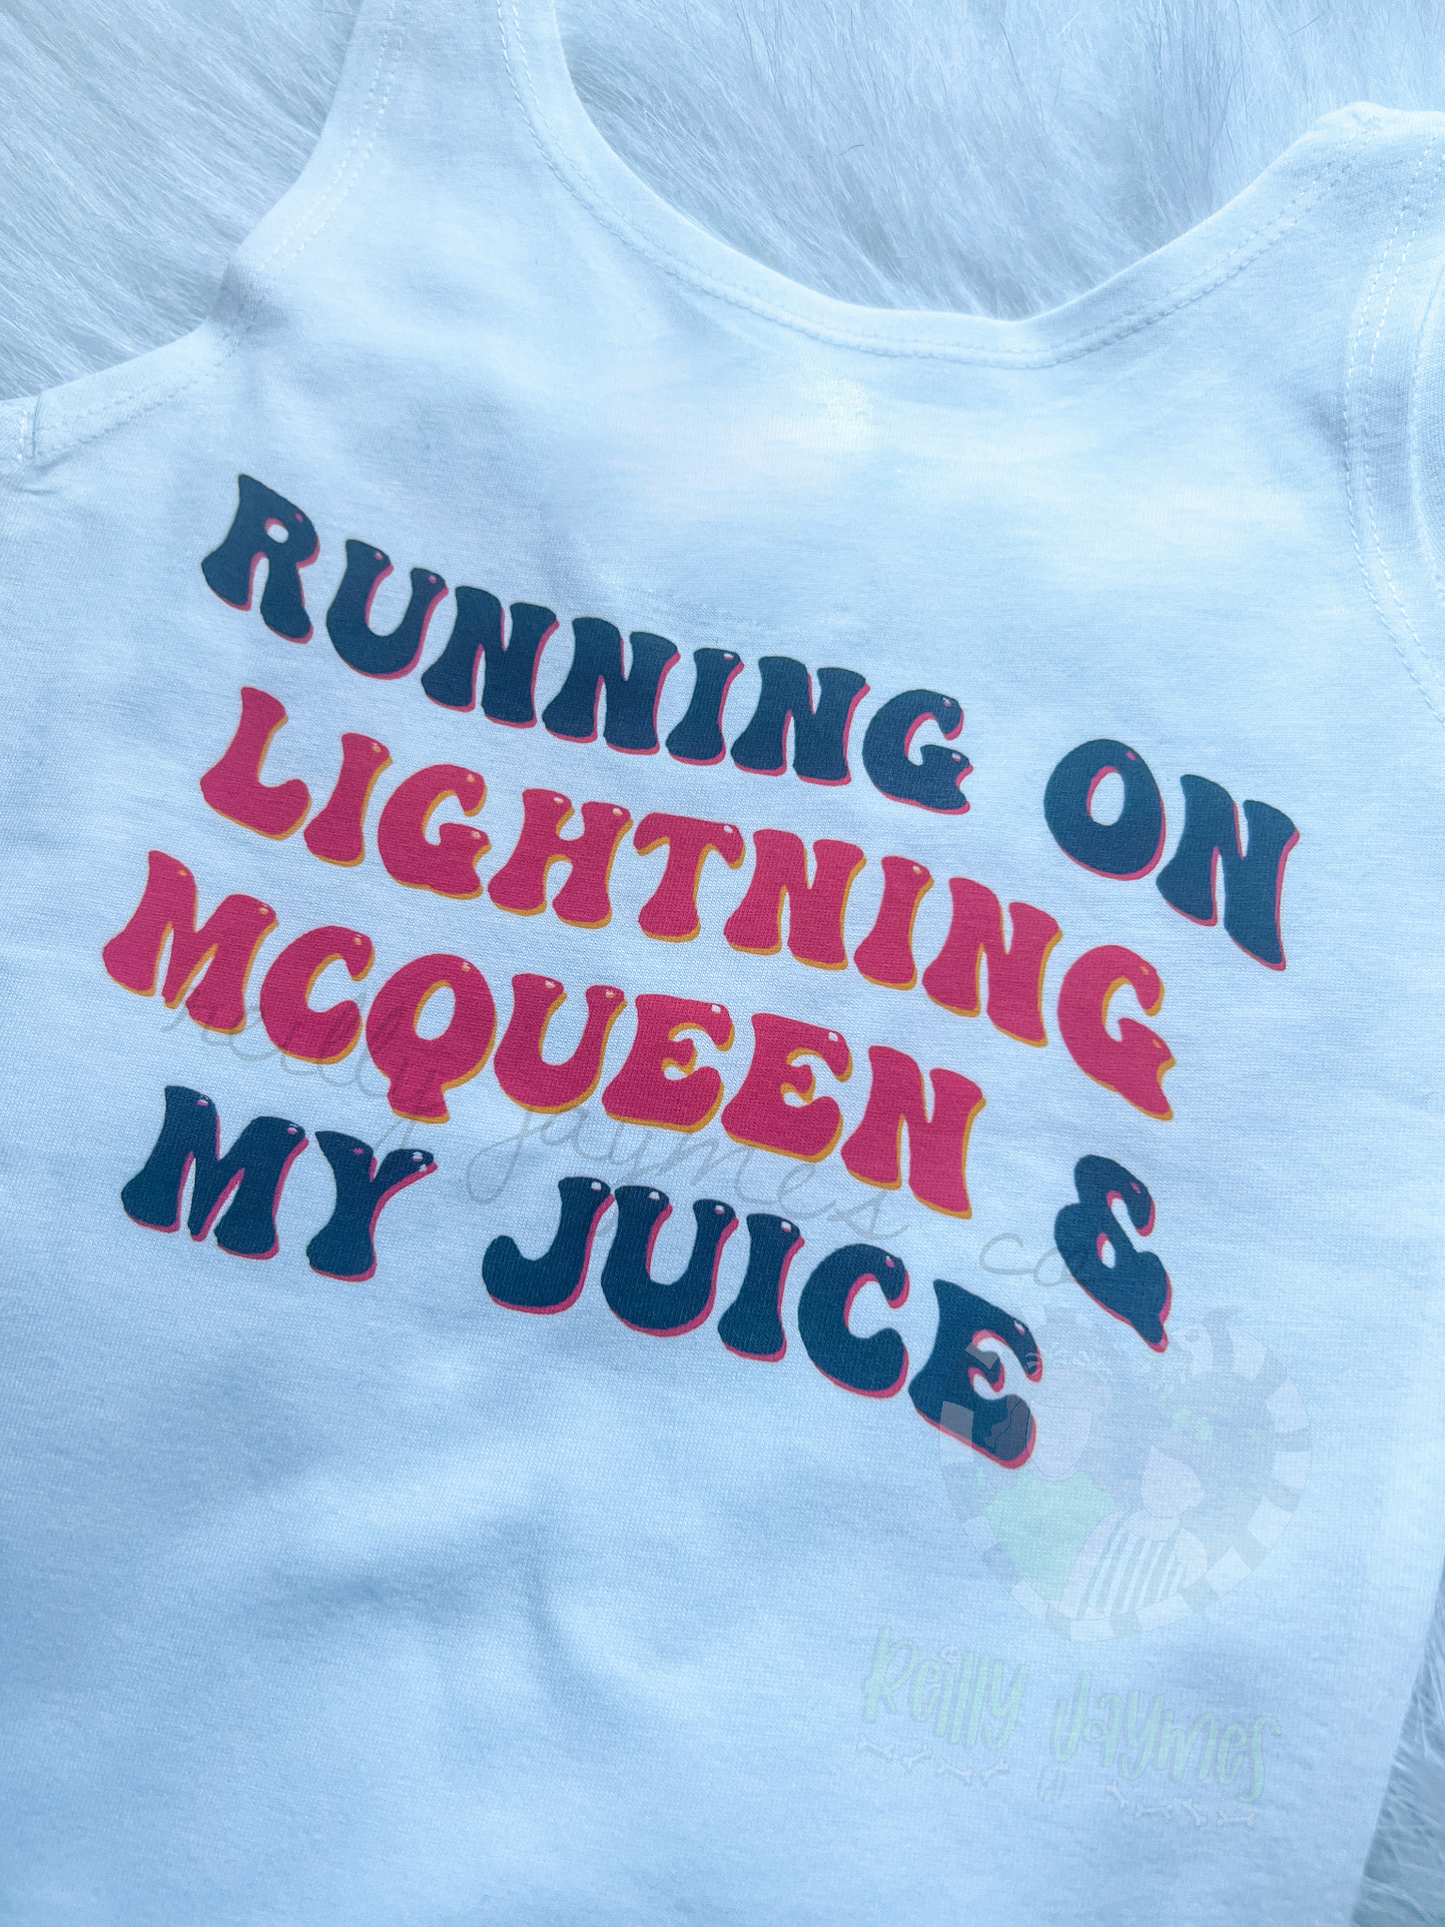 Running on Lightning & my juice